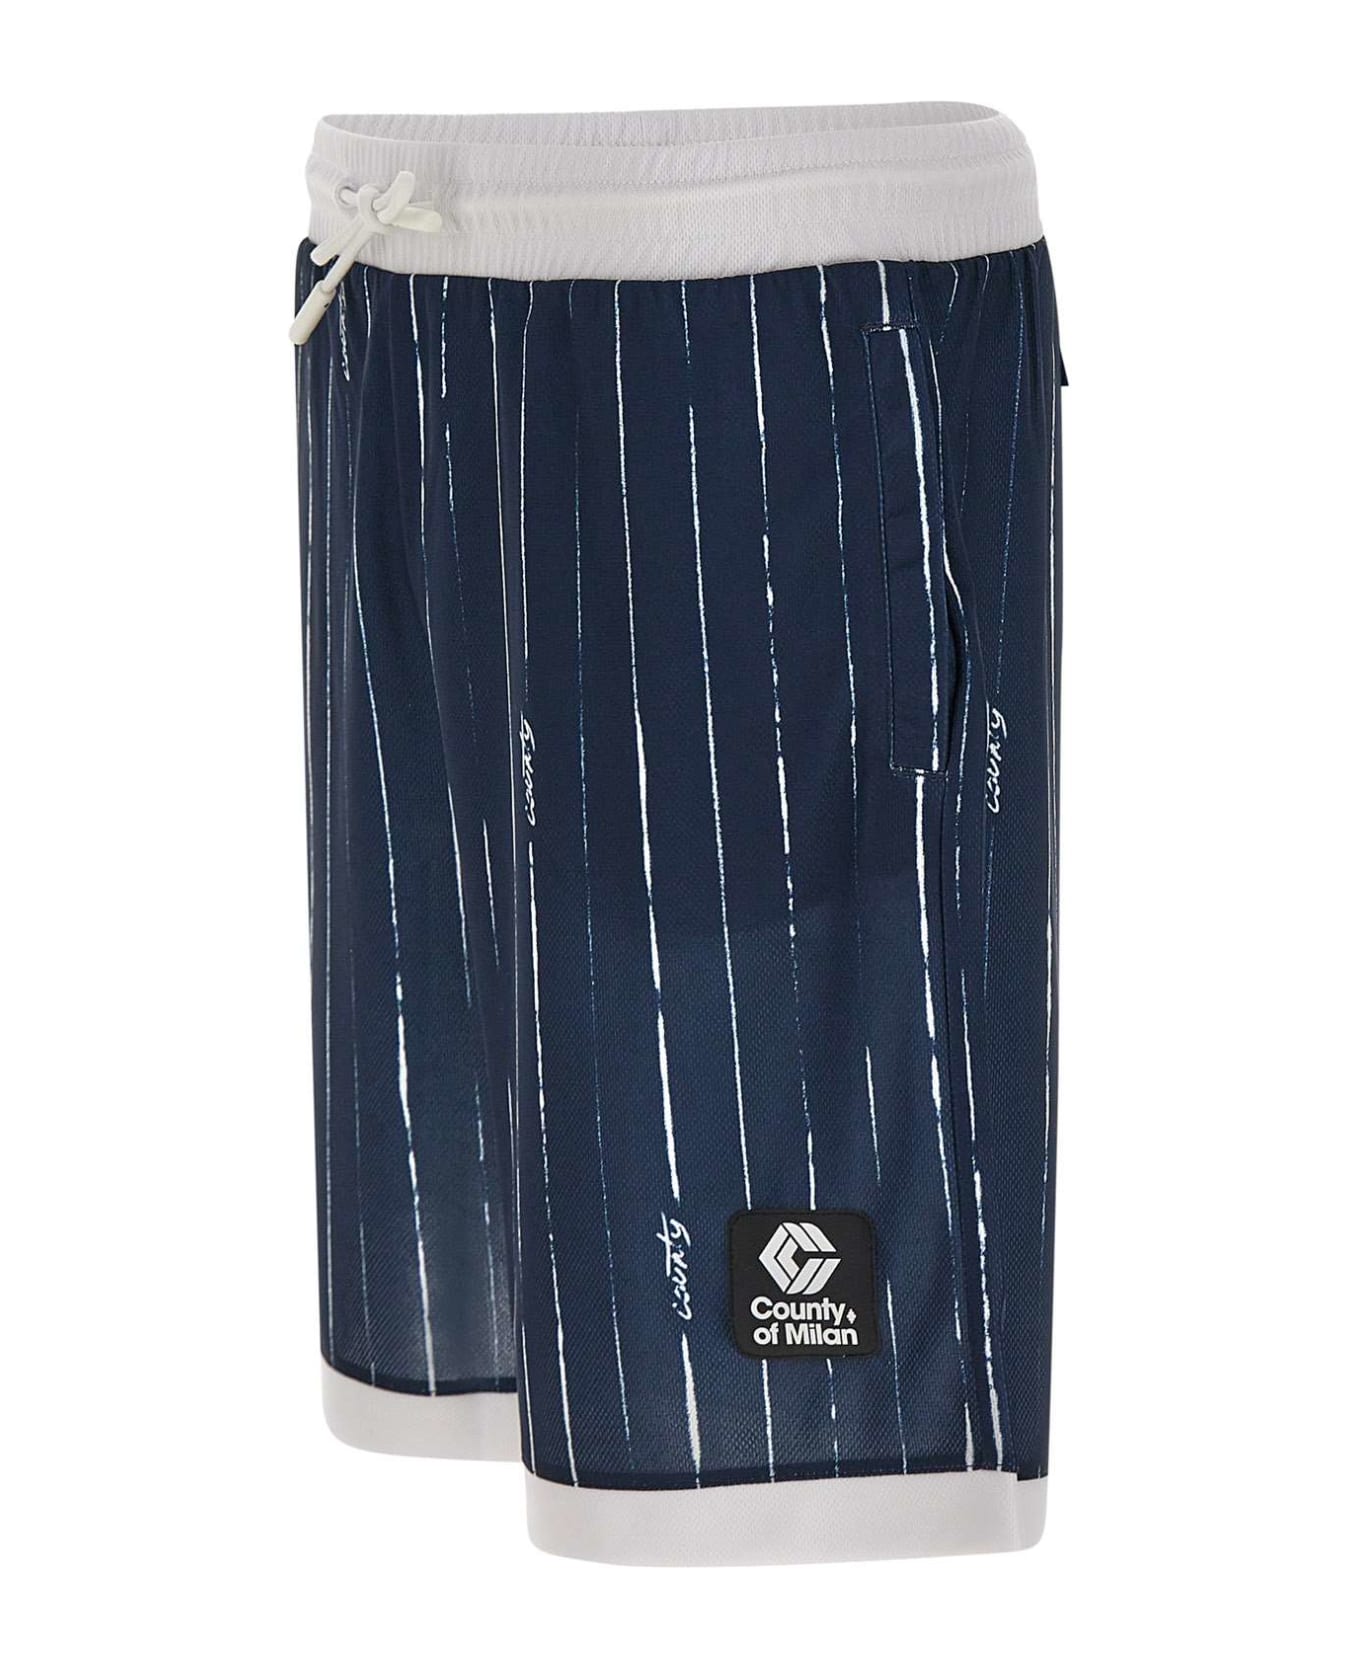 Marcelo Burlon "county Pinstripes" Shorts - BLUE